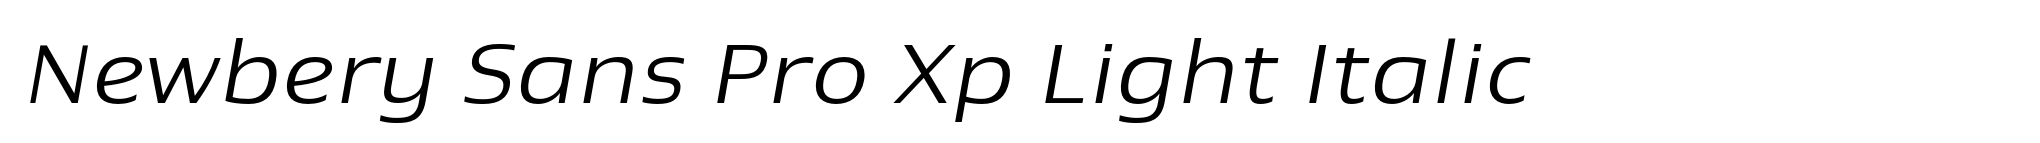 Newbery Sans Pro Xp Light Italic image